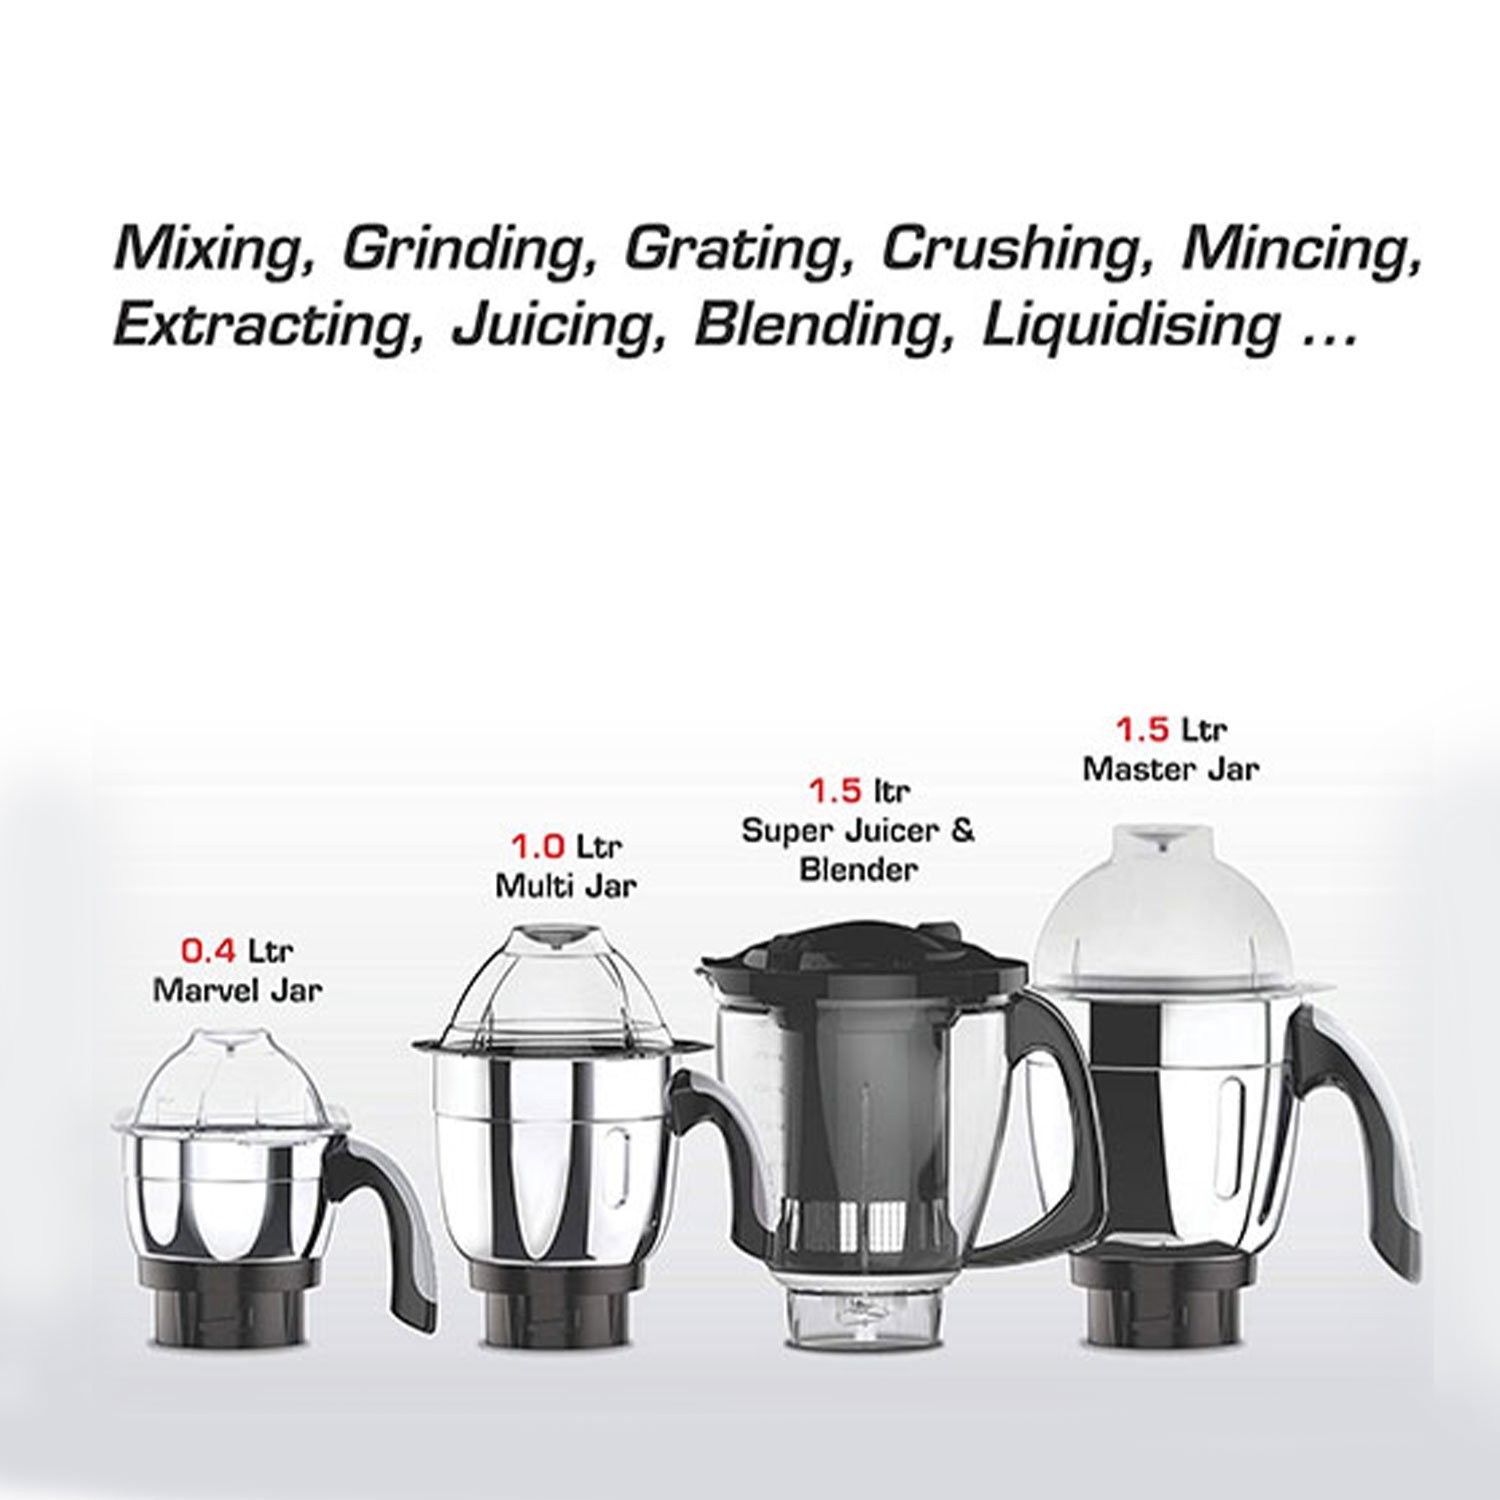 vidiem-adc-mixer-grinder-blender-food-processor-750w-5-stainless-steel-jars-indian-mixer-grinder-with-almond-nut-milk-juicer-spice-coffee-grinder-jar-110v-for-use-in-canada-usa6